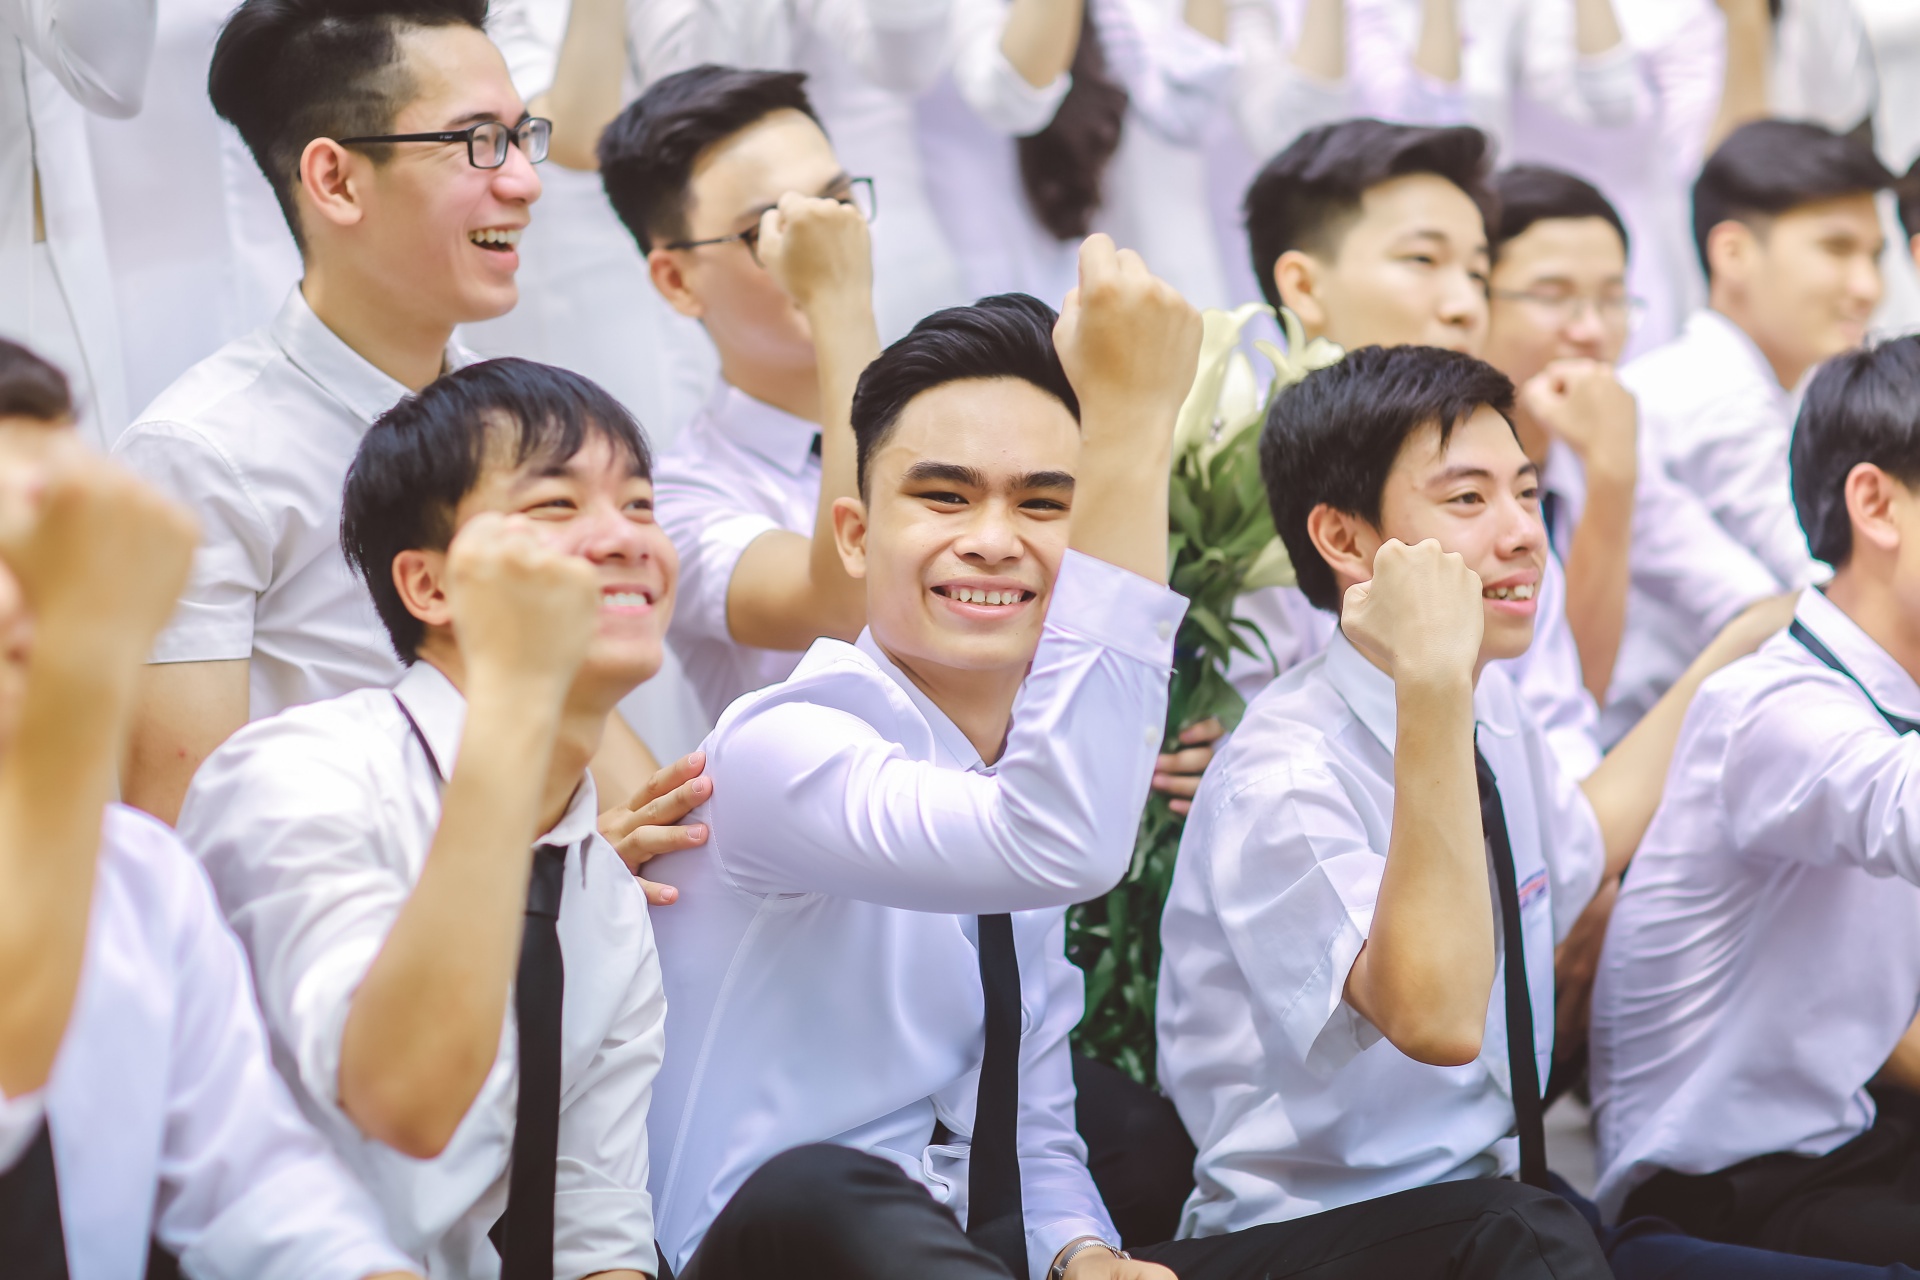 Entrepreneurs remain inspirations for Vietnamese youth